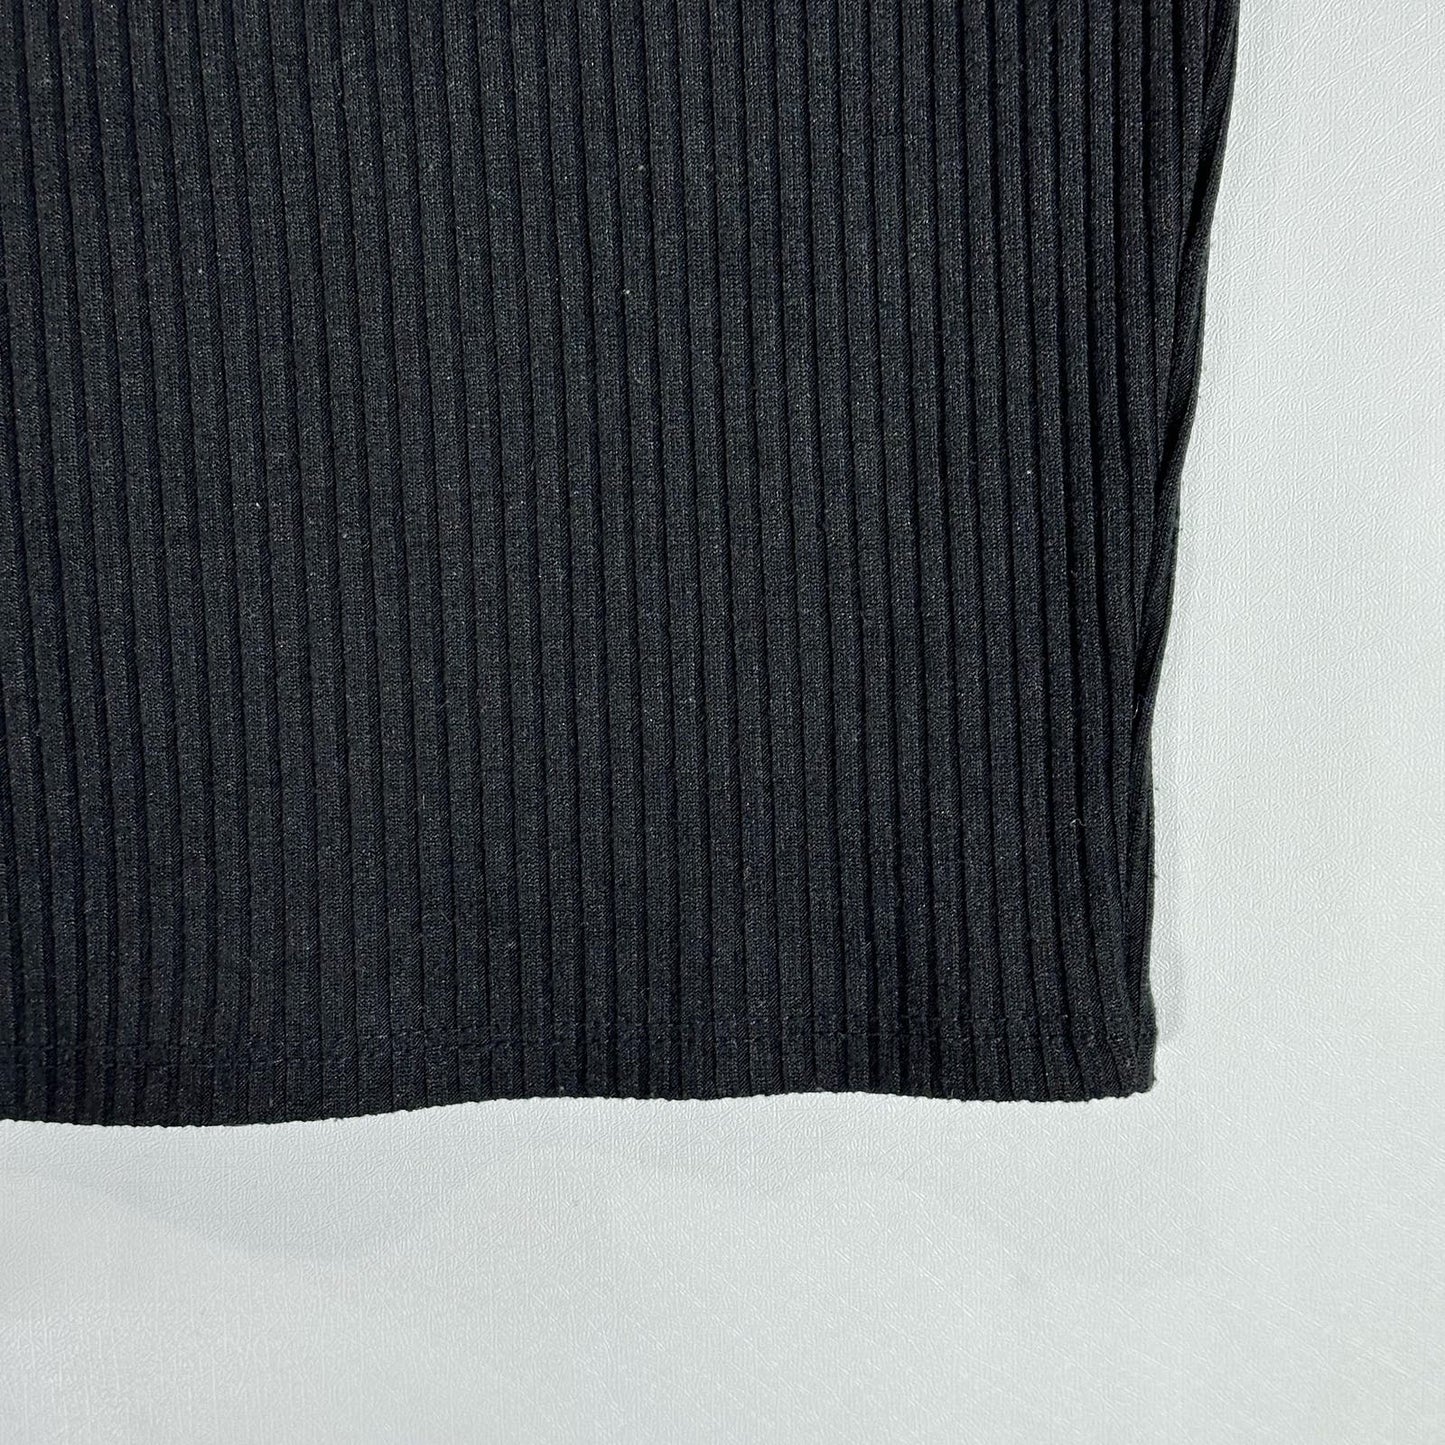 KENDALL & KYLIE Women's Black Ribbed One-Shoulder Bodycon Mini Dress SZ XS